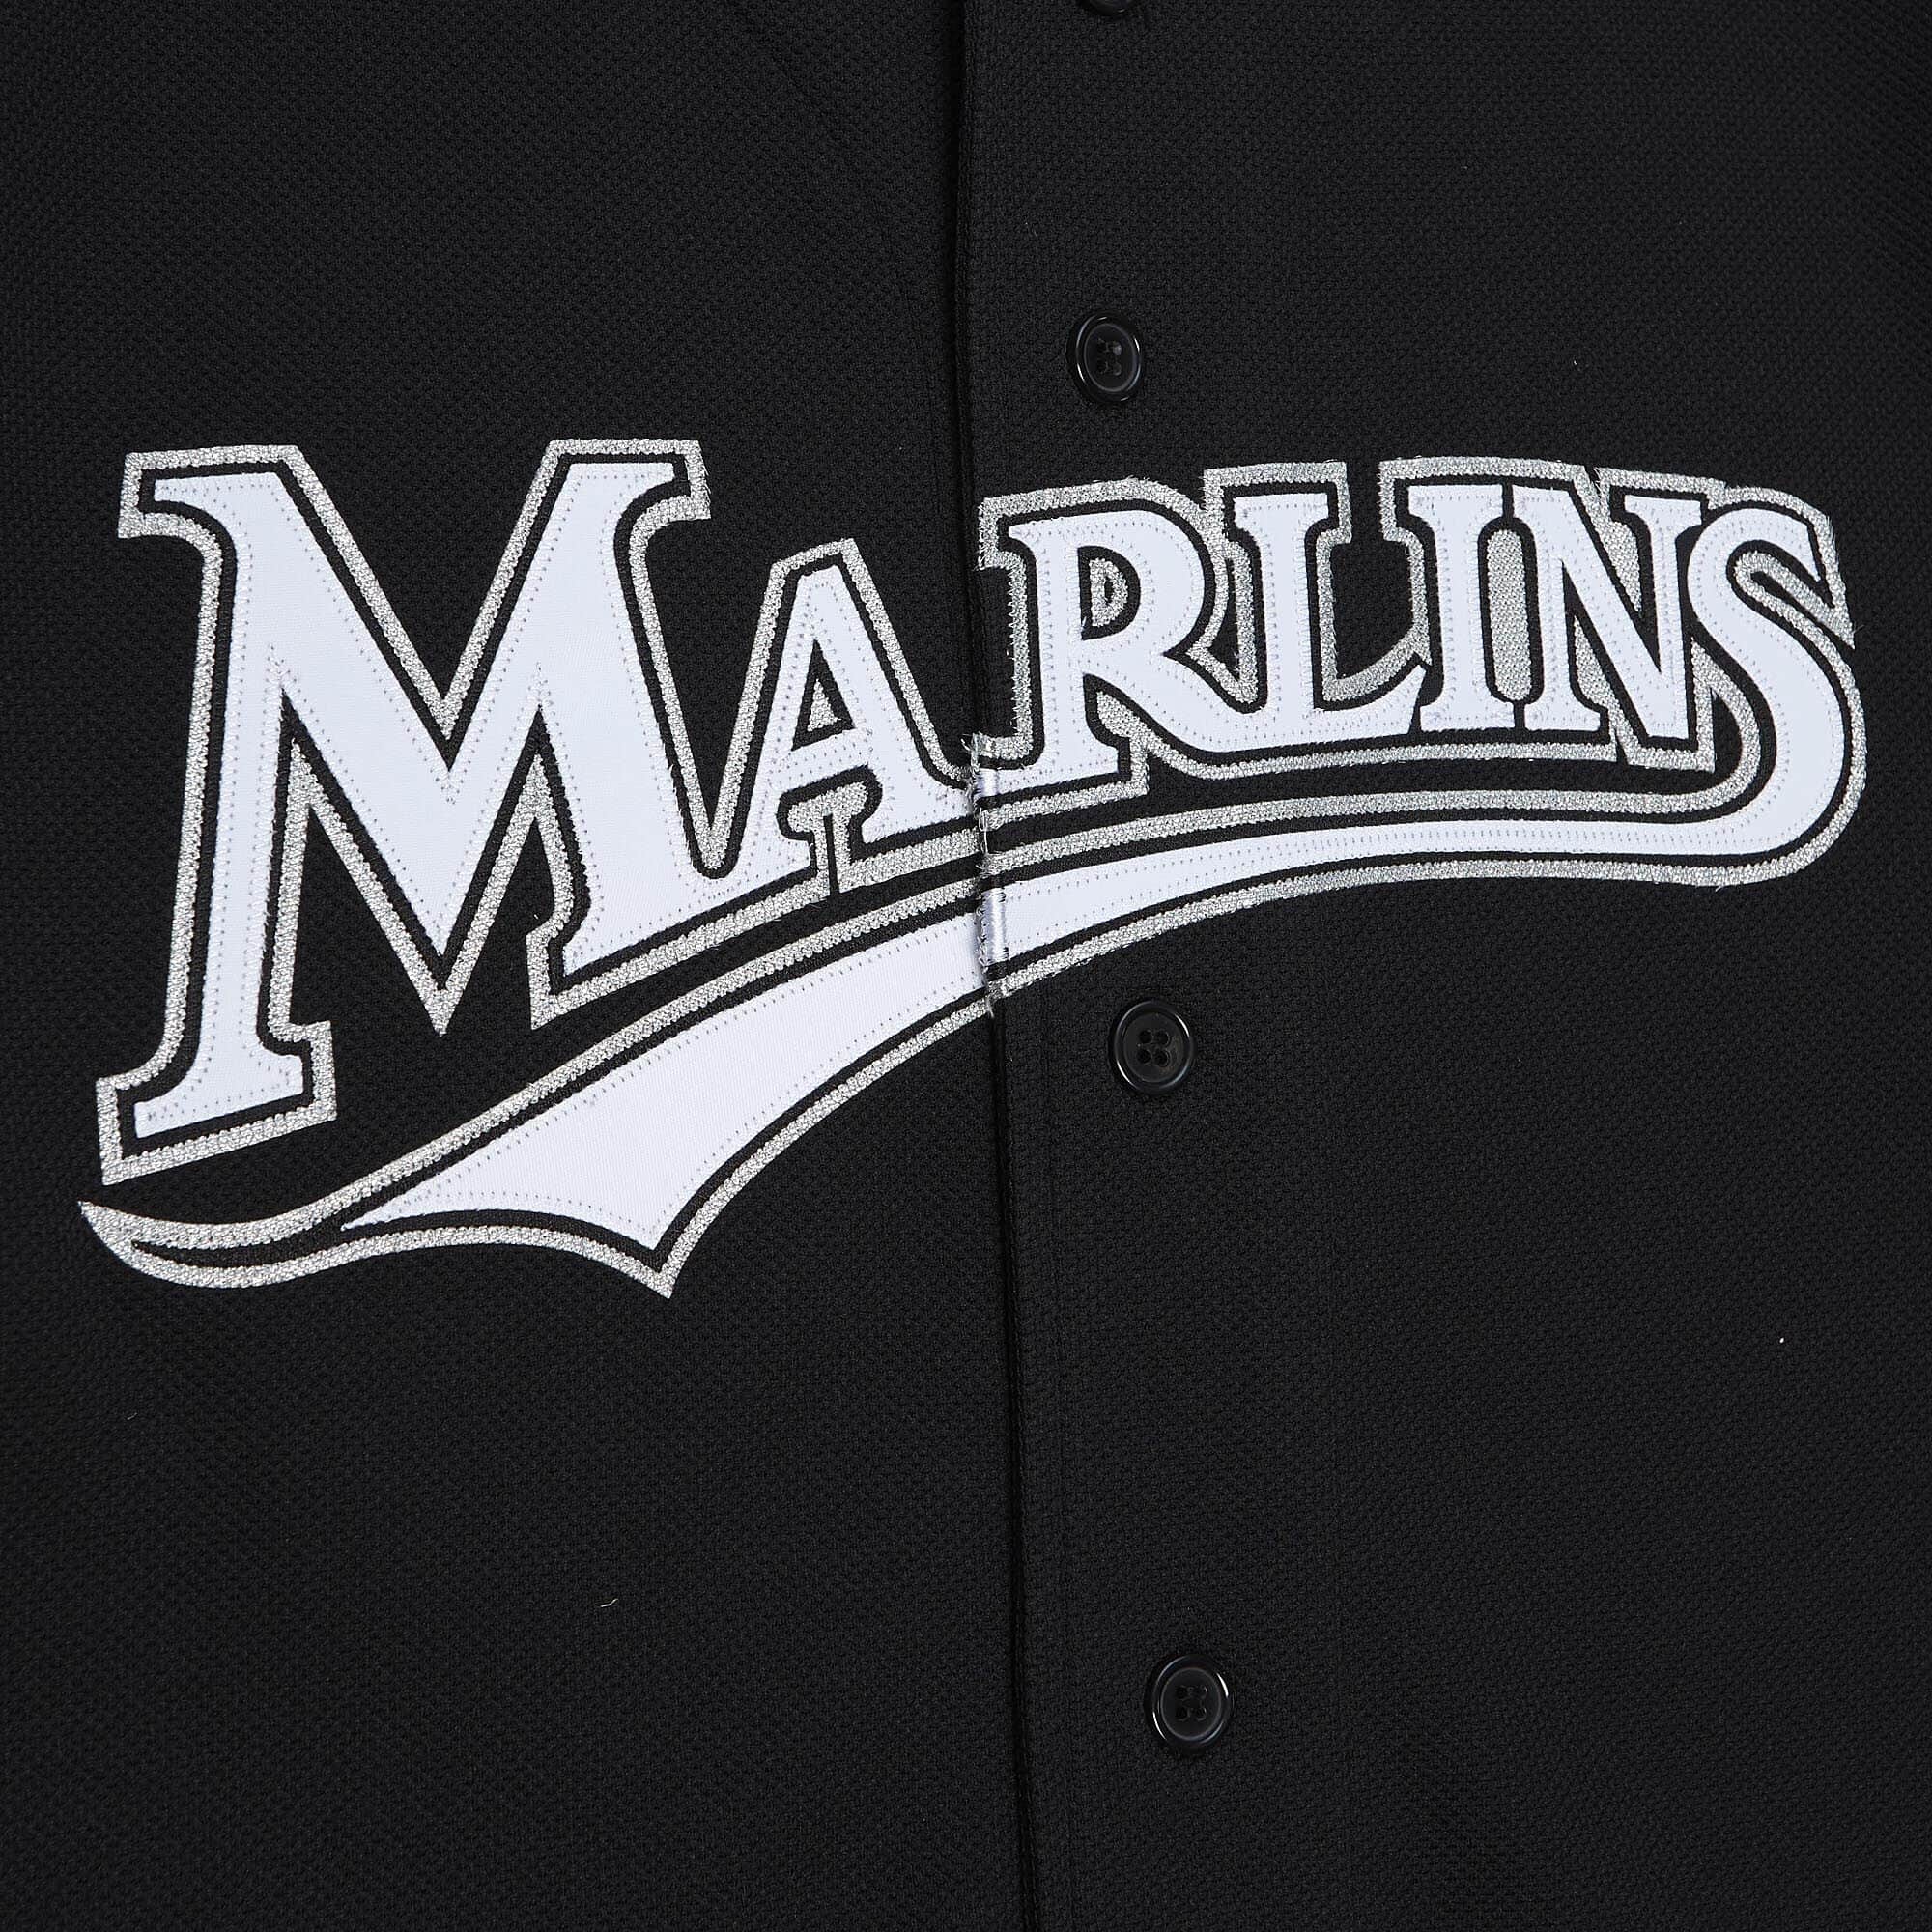 marlins black jersey